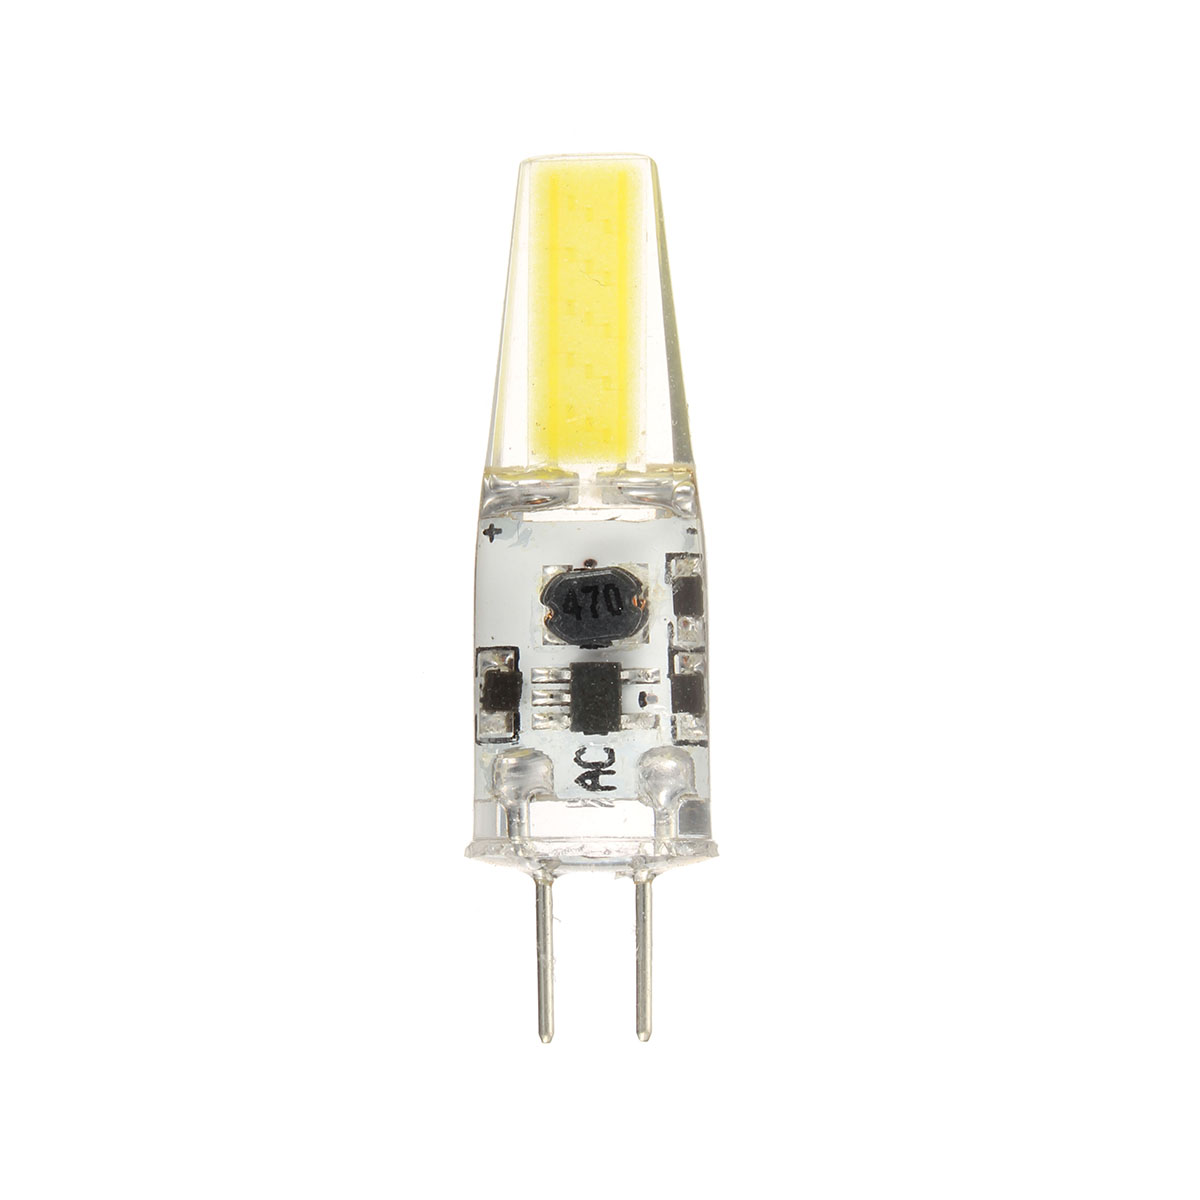 4PCS-Mini-G4-2W-Pure-White-COB-LED-Bulb-for-Chandelier-Light-Replace-Halogen-Lamp-DCAC12V-1454467-2